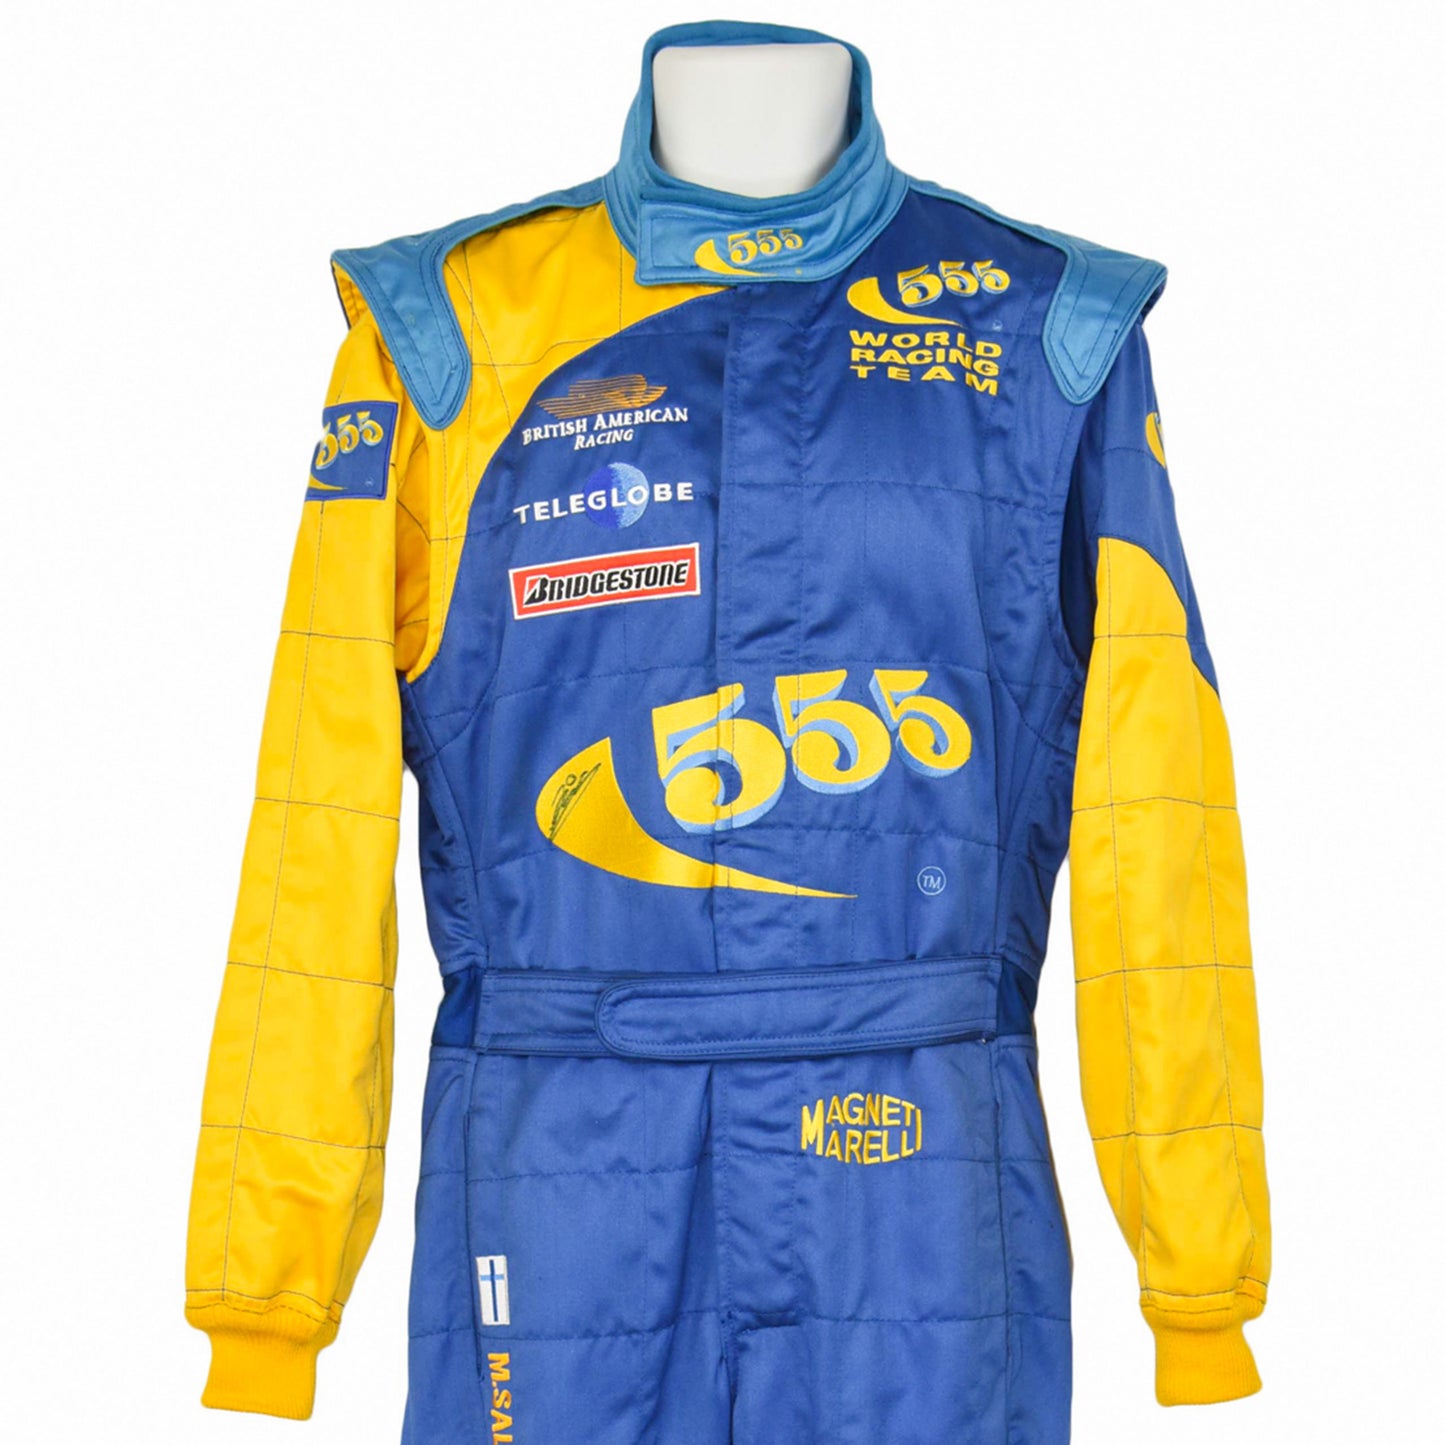 1999 Mika Salo Race BAR Formula 1 Suit